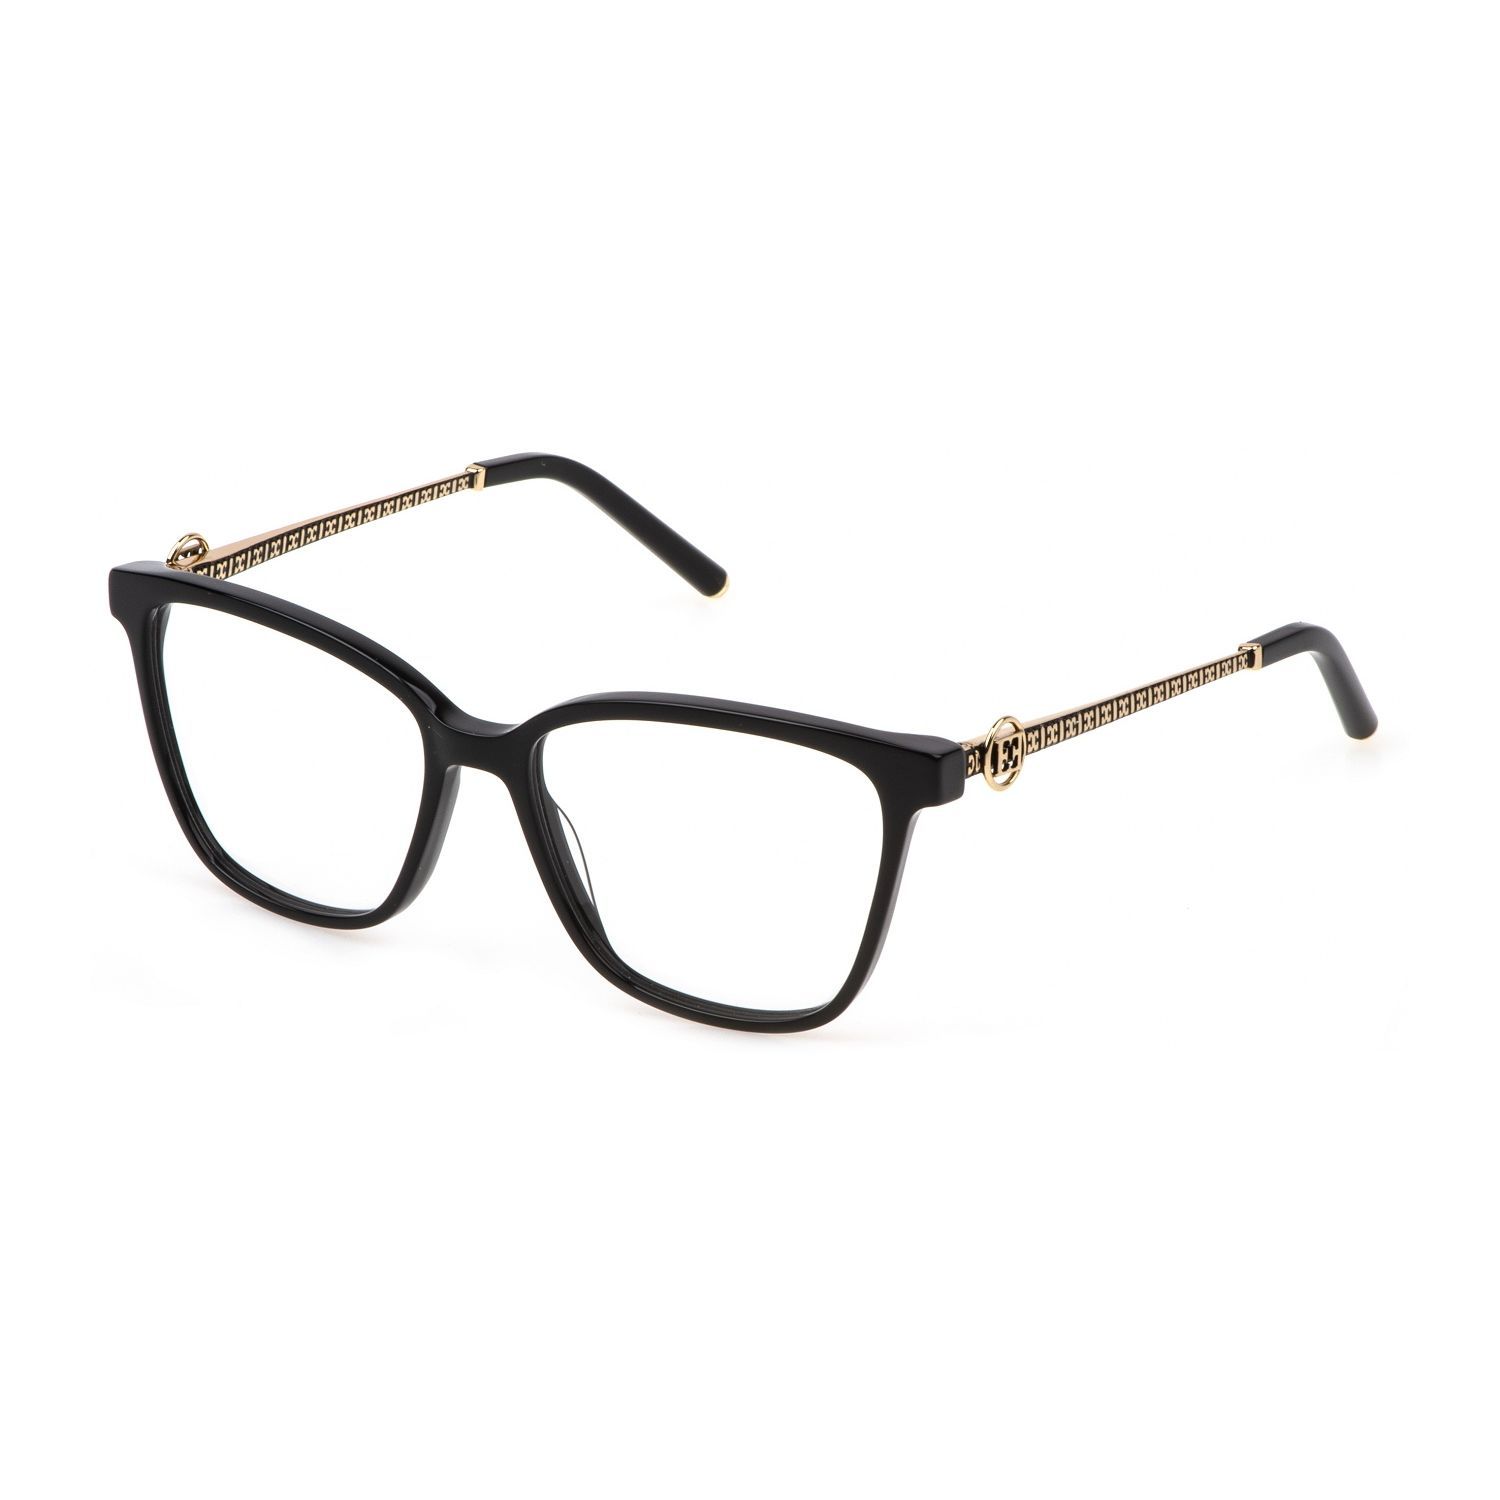 VESE31 Square Eyeglasses 0700 - size 54